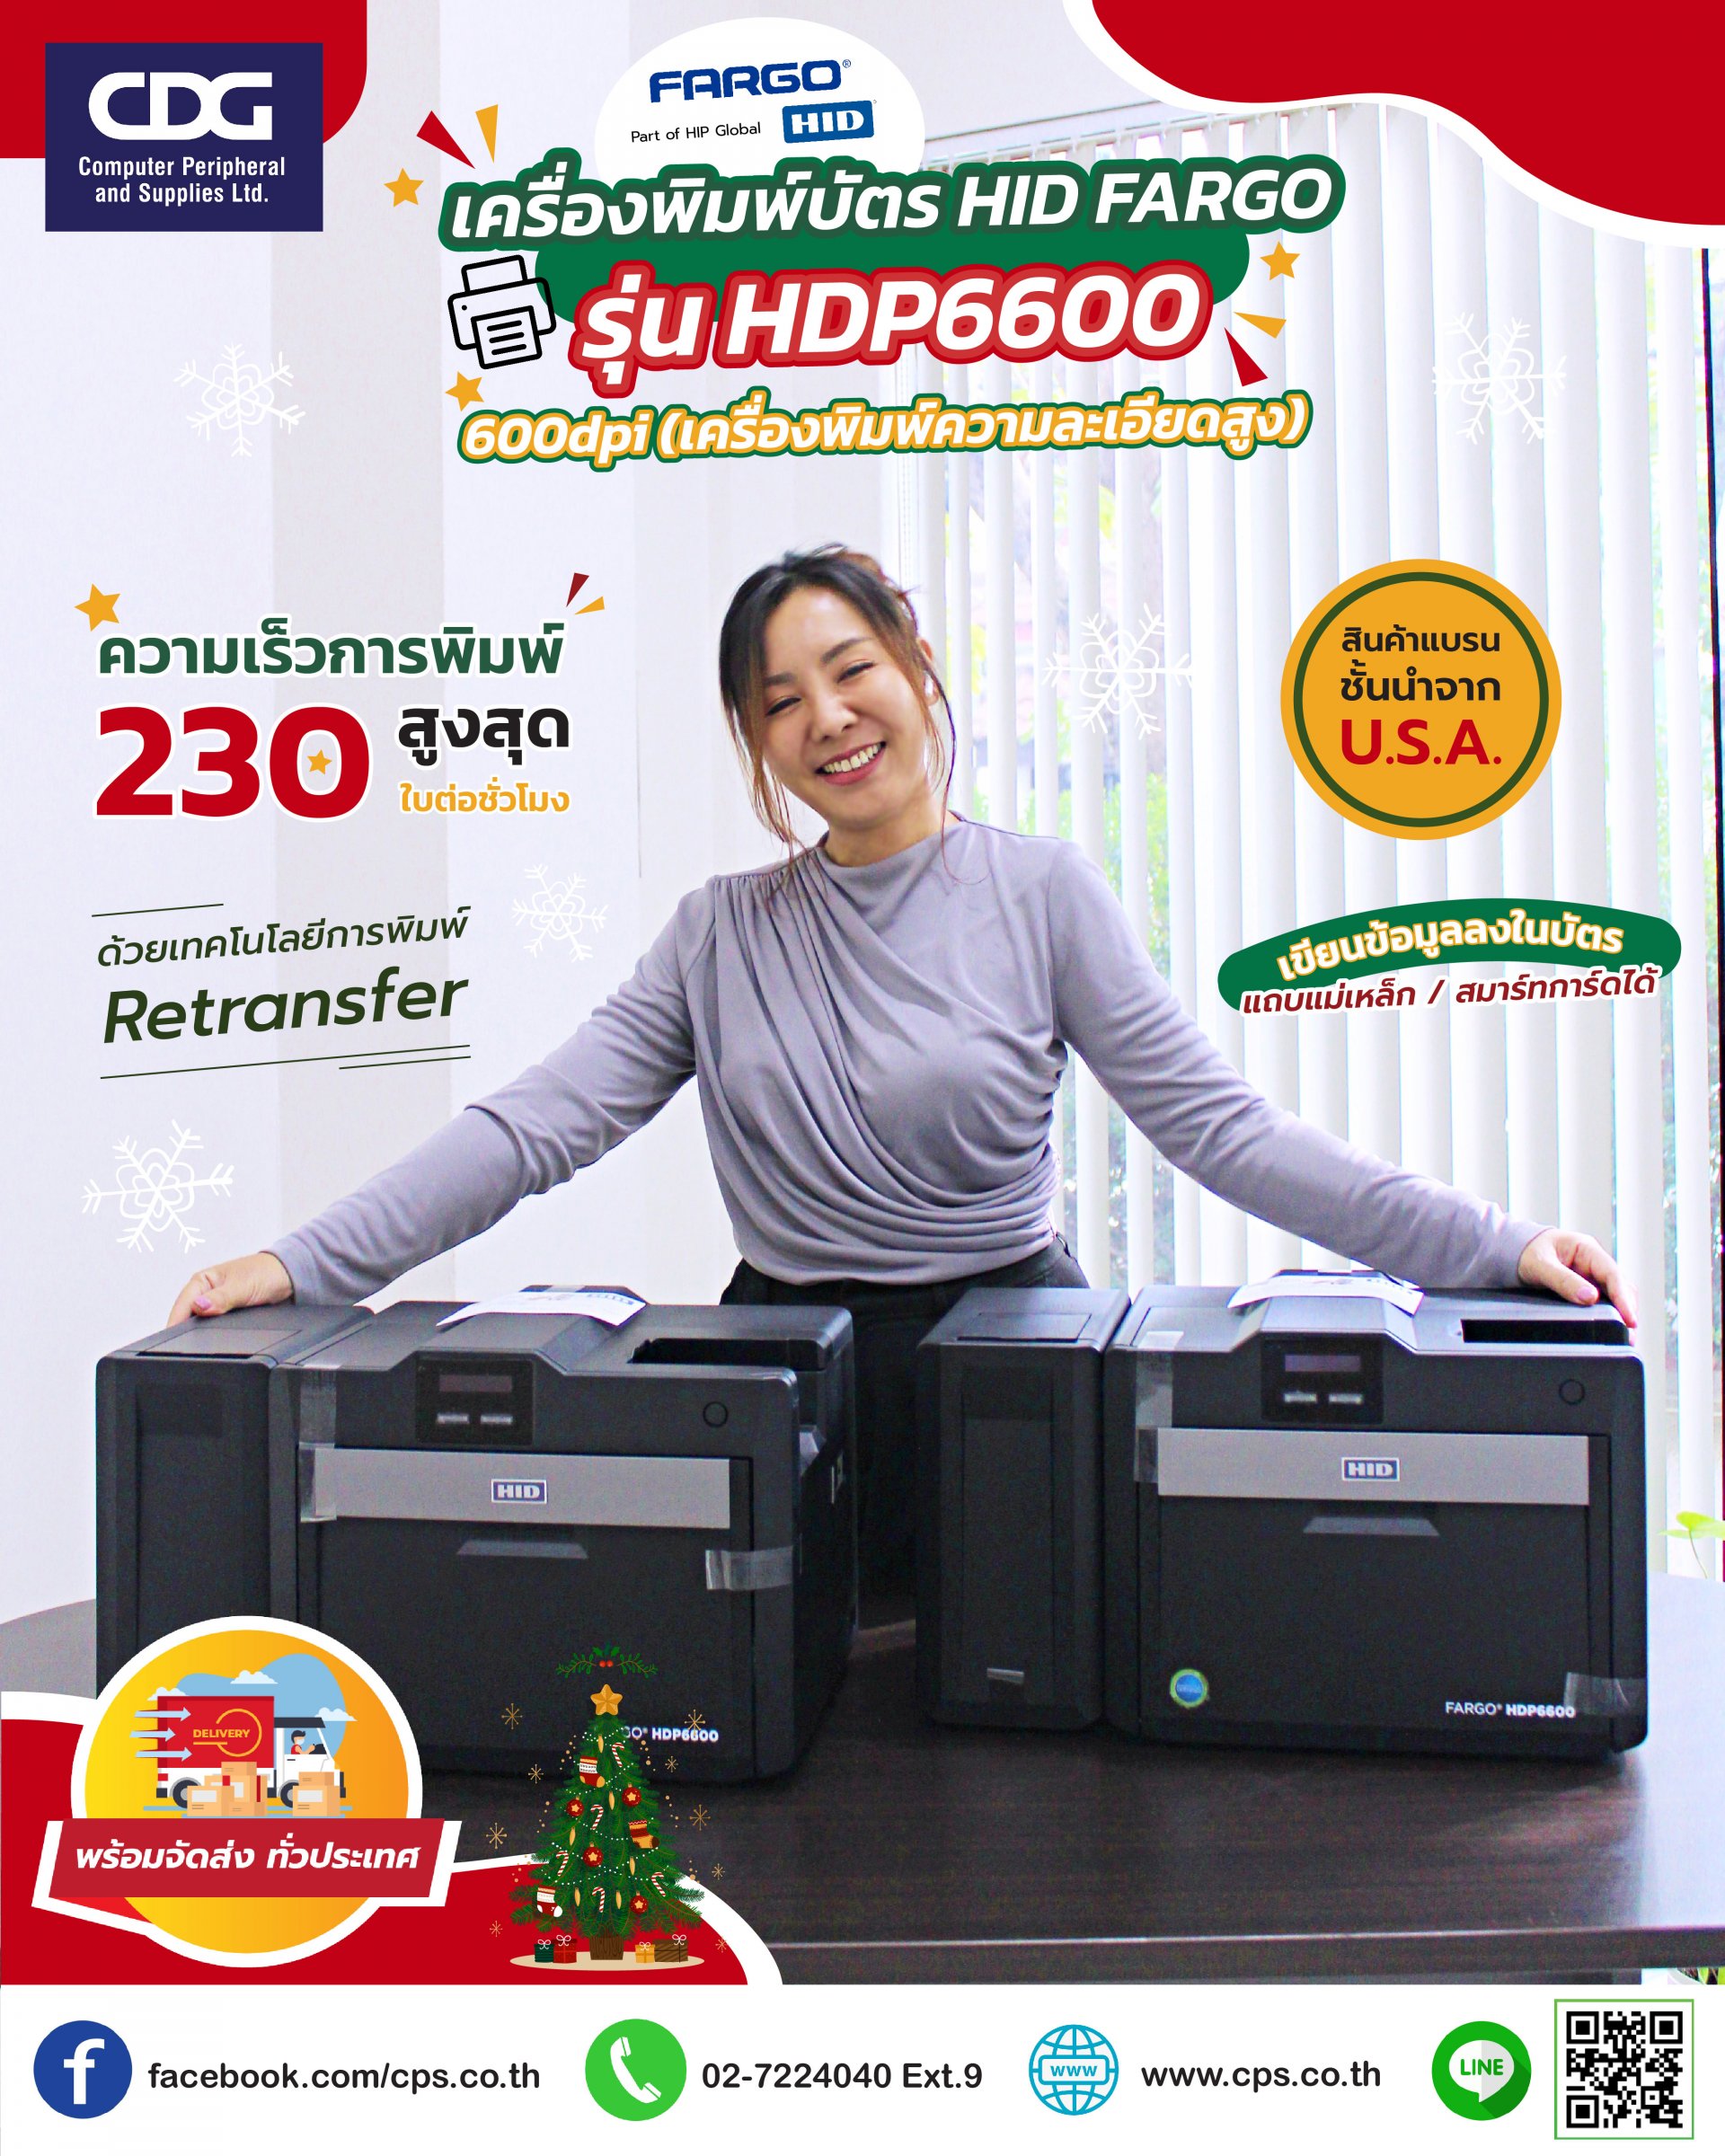 HID FARGO® HDP6600 High Definition Printer